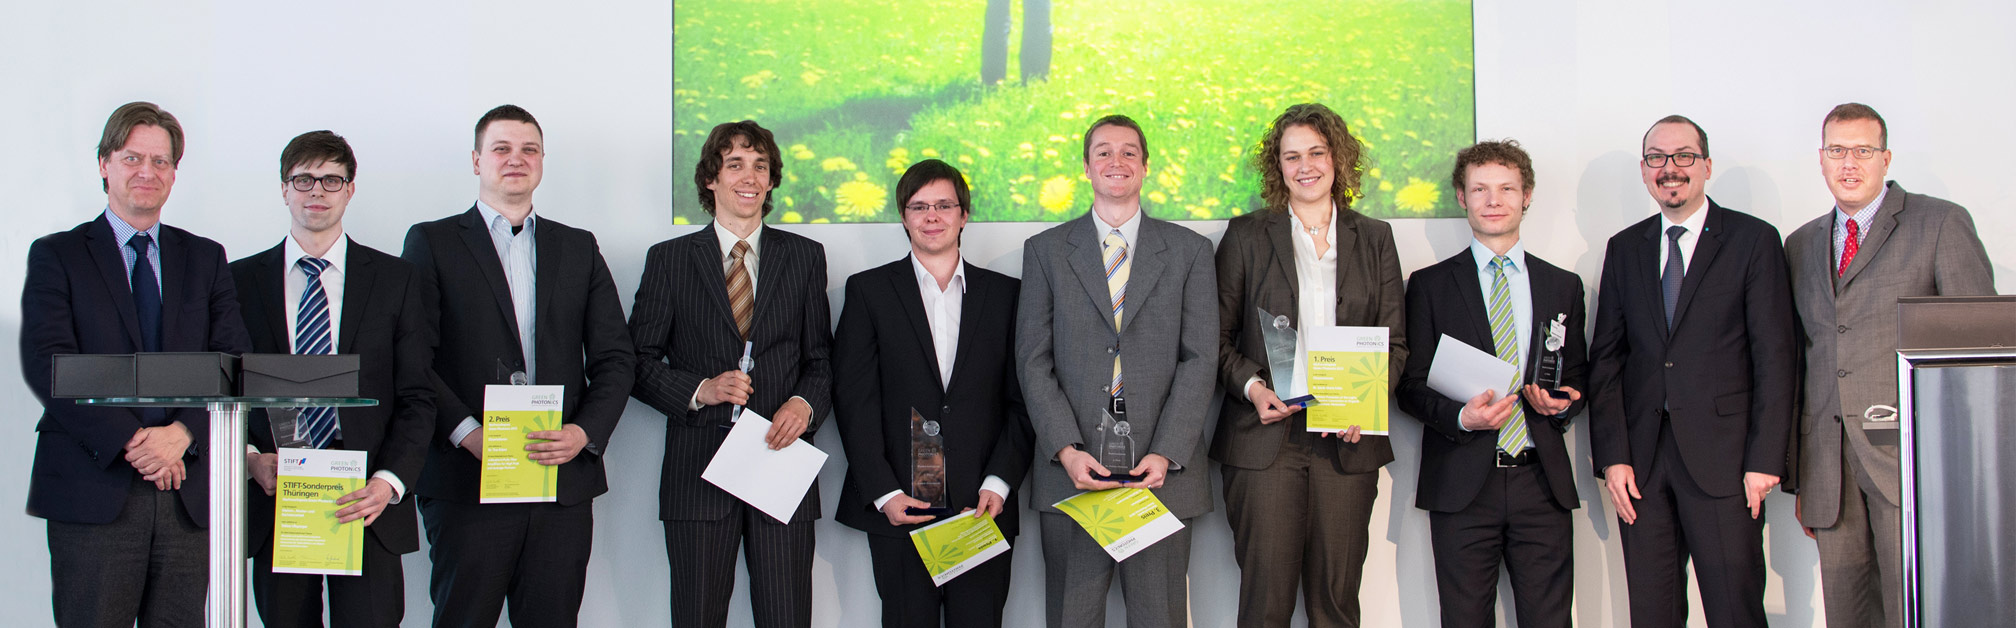 Nachwuchspreis Green Photonics Gewinner 2013